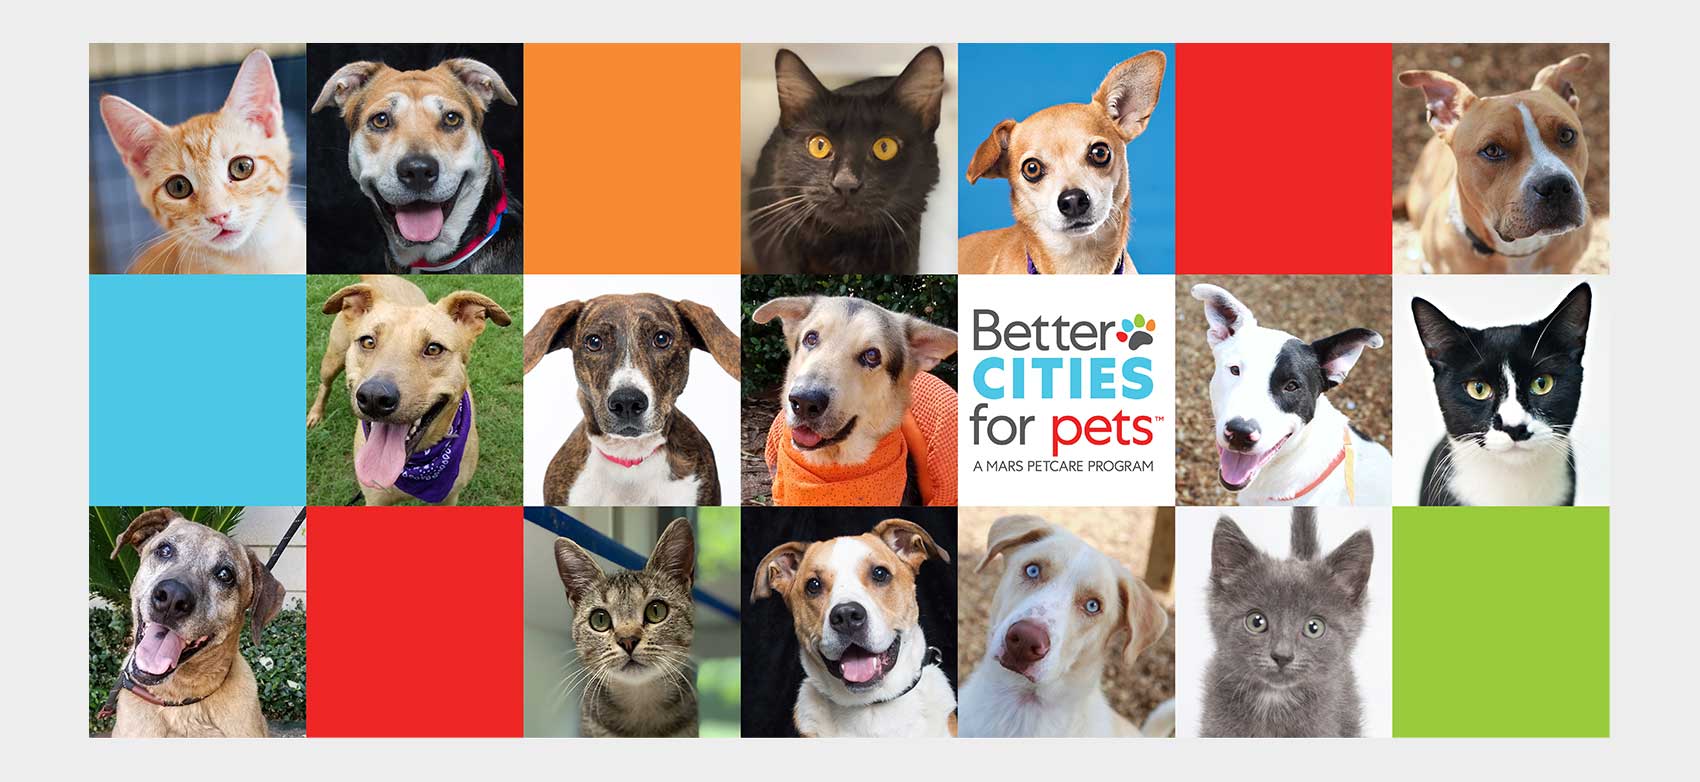 collage of adoptable pets|Friends for Life logo|Houston Humane logo|Metro Nashville Animal Care & Control logo|Nashville Humane logo|William County Animal Center logo|collage of dogs